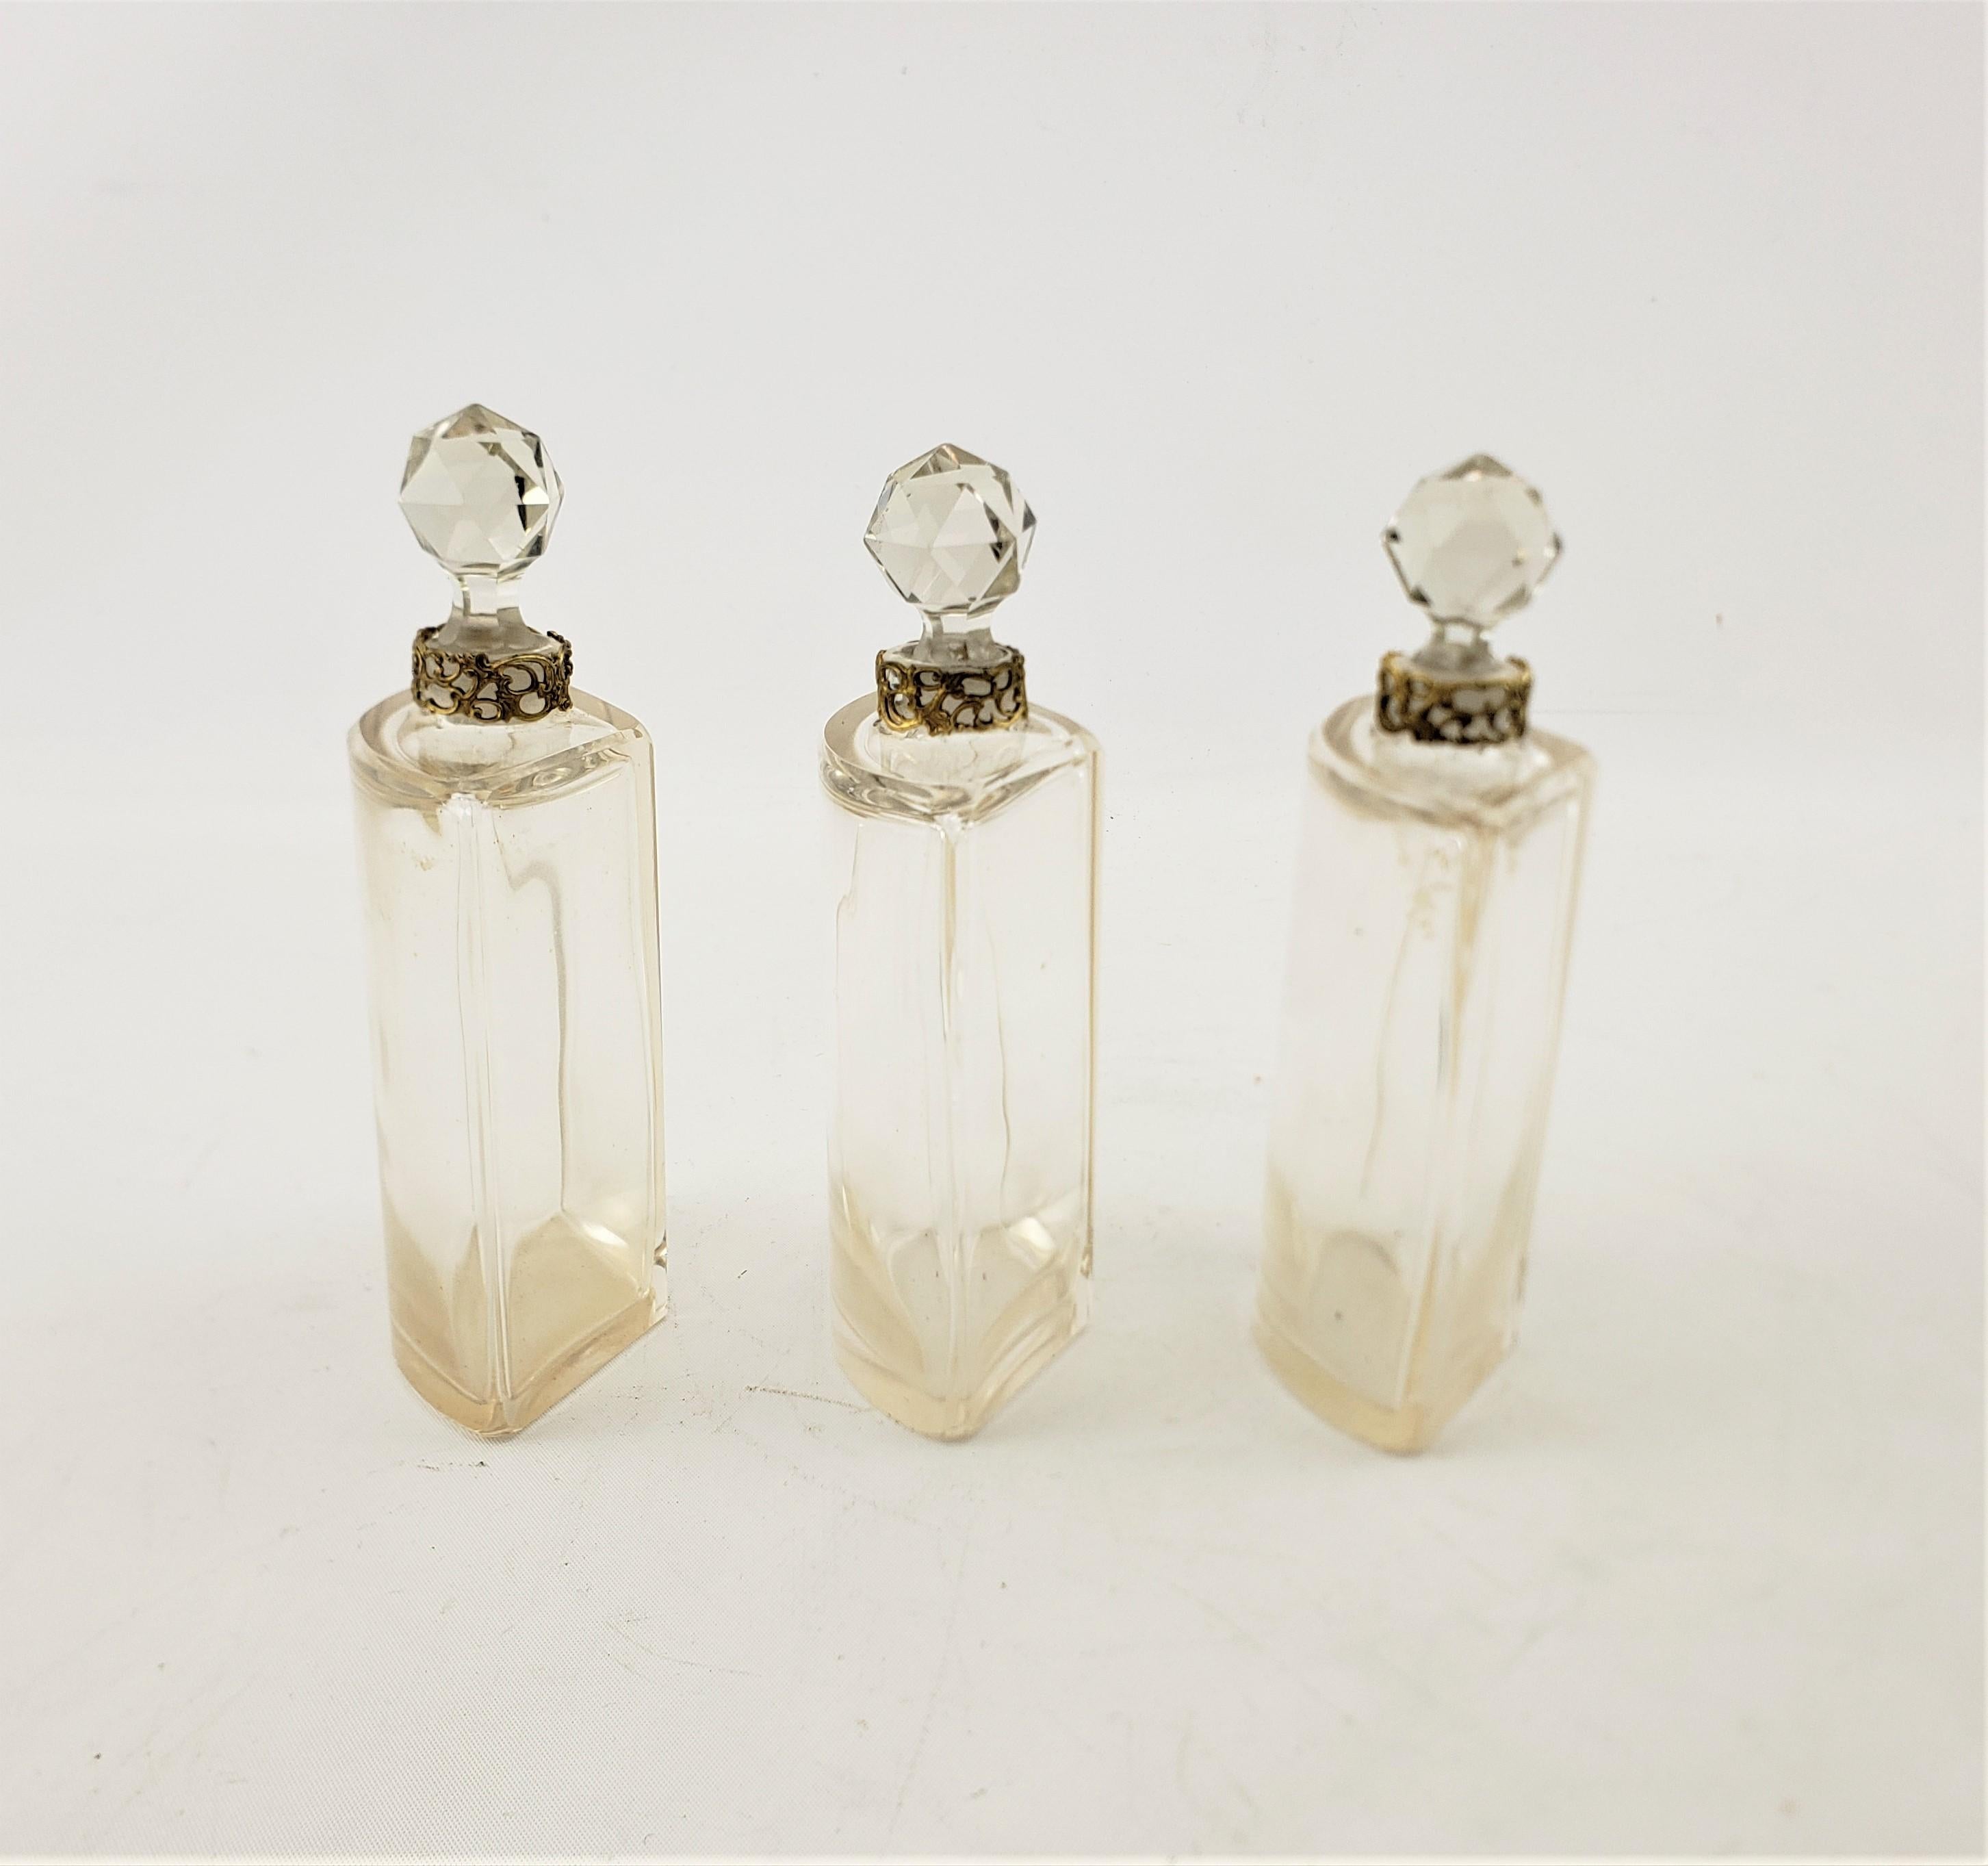 Antique Art Nouveau 3 Glass Perfume Bottle Set with Stylized Nude Female Motif For Sale 1